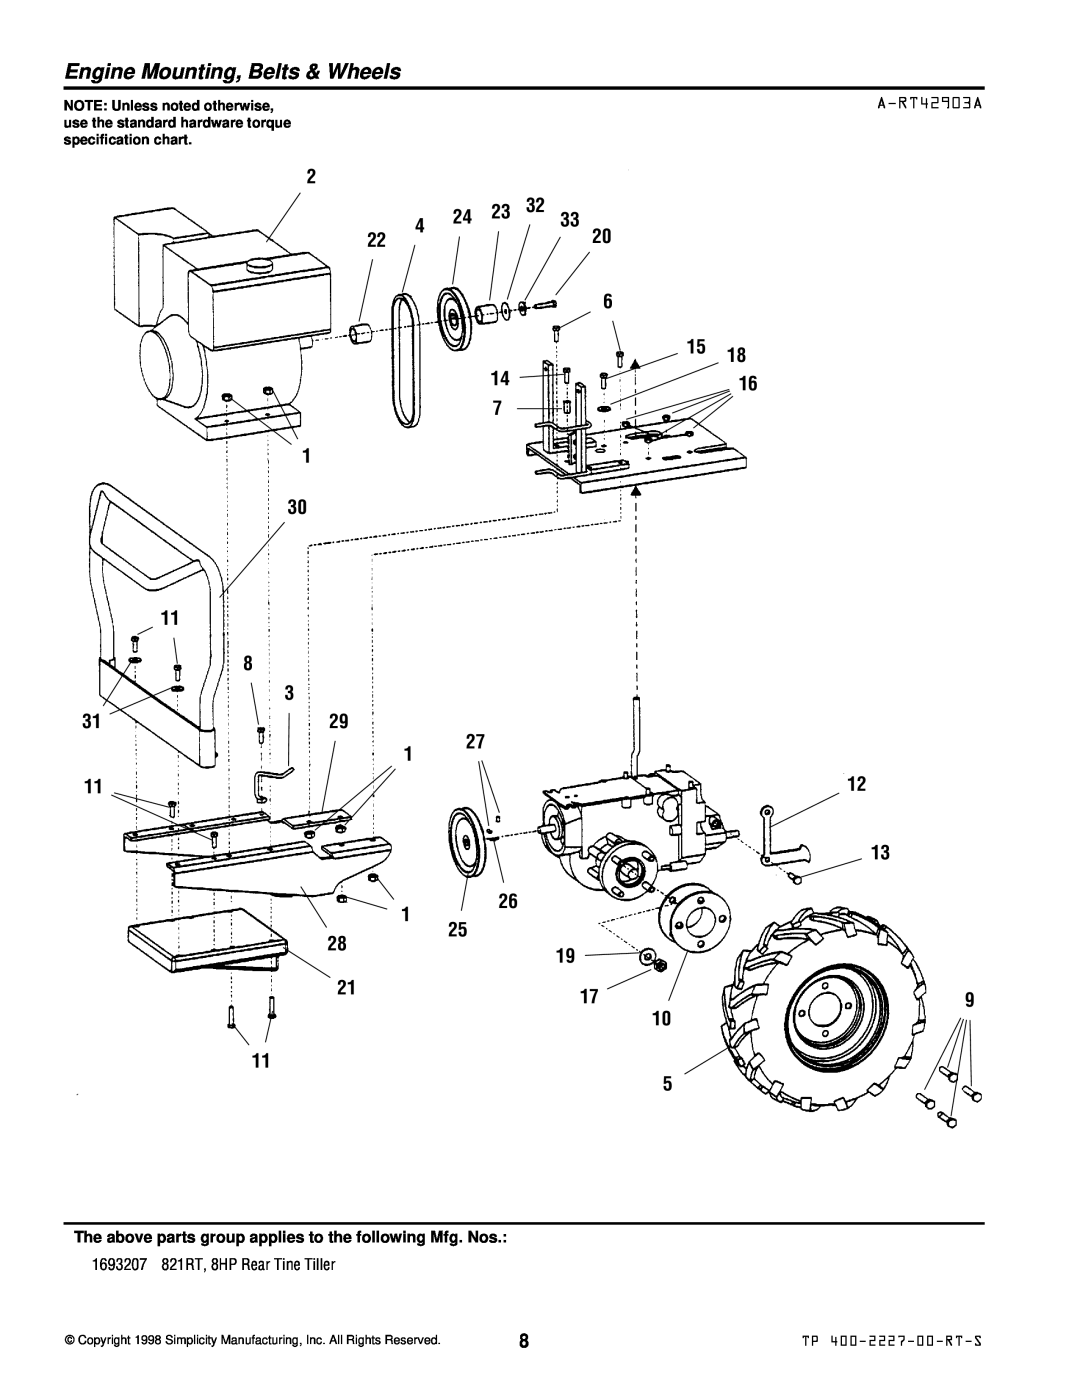 Simplicity 821RT manual Engine Mounting, Belts & Wheels, H L Hl Hi Ih Hhhf, R I Hs, Hm Gs 